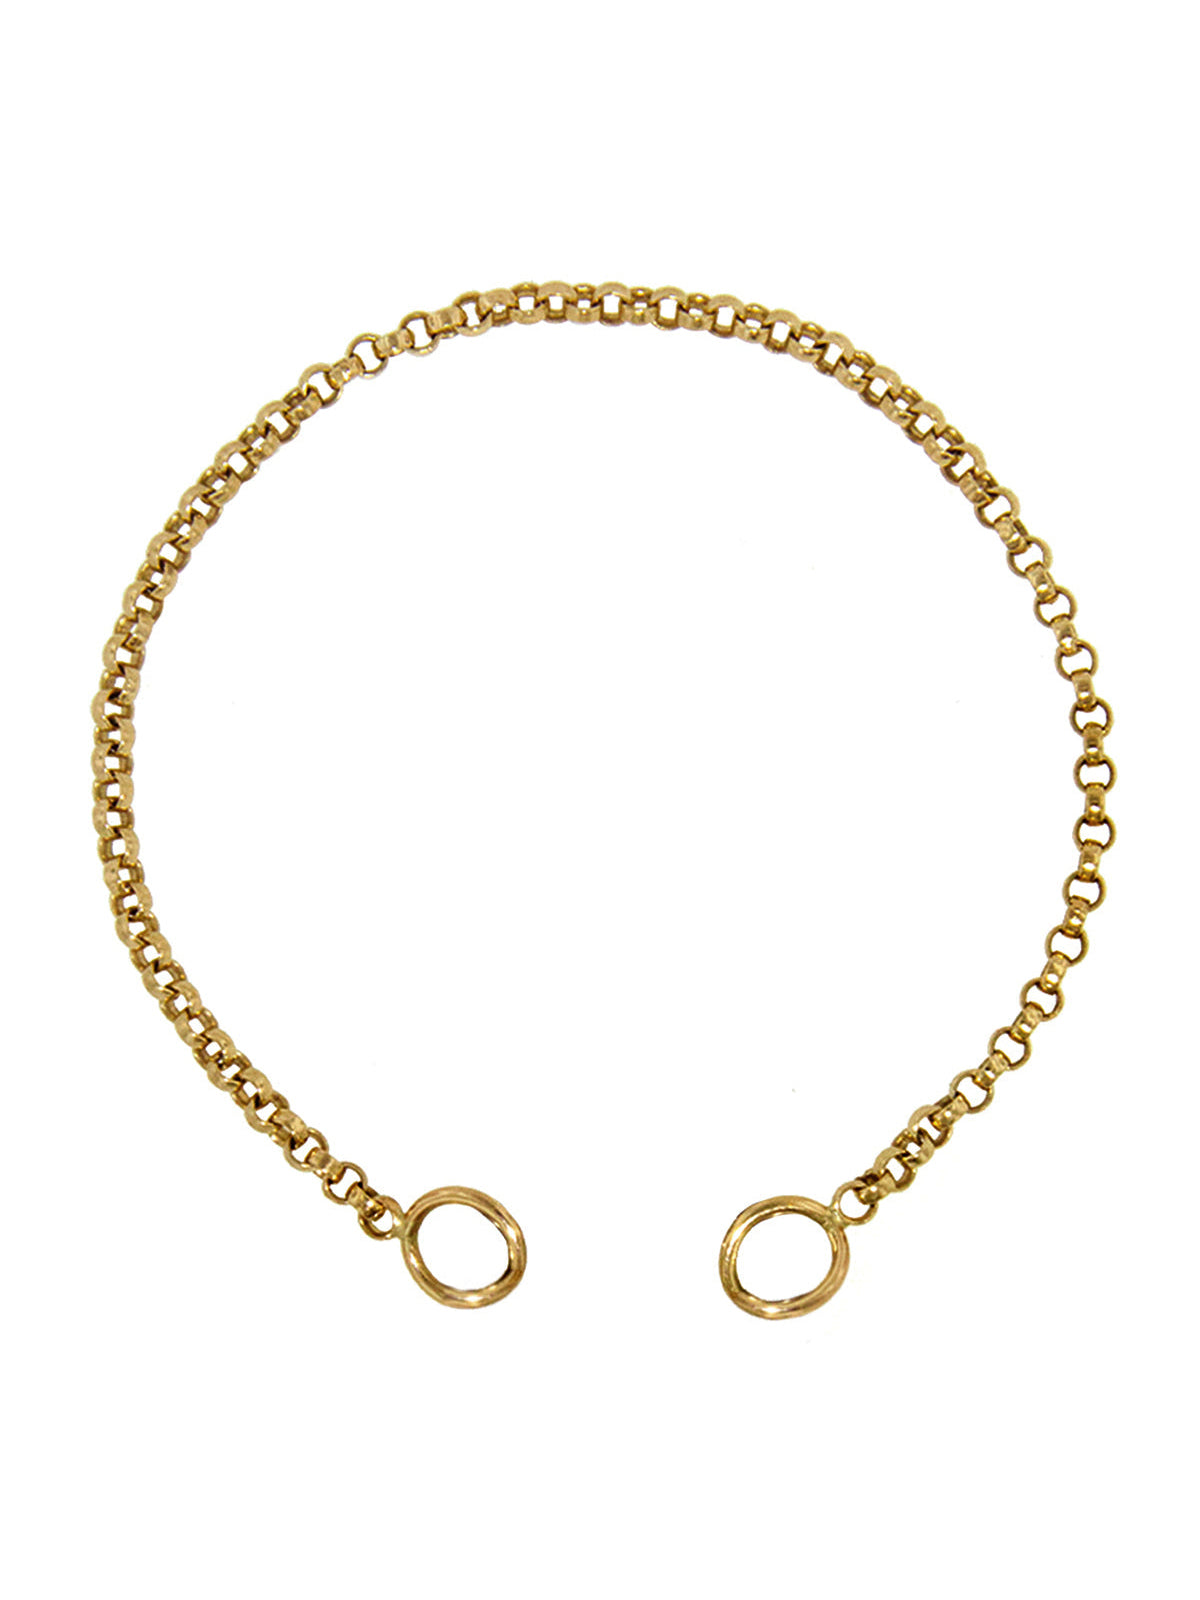 Photos - Bracelet Yellow Gold Rolo Chain , 6.5